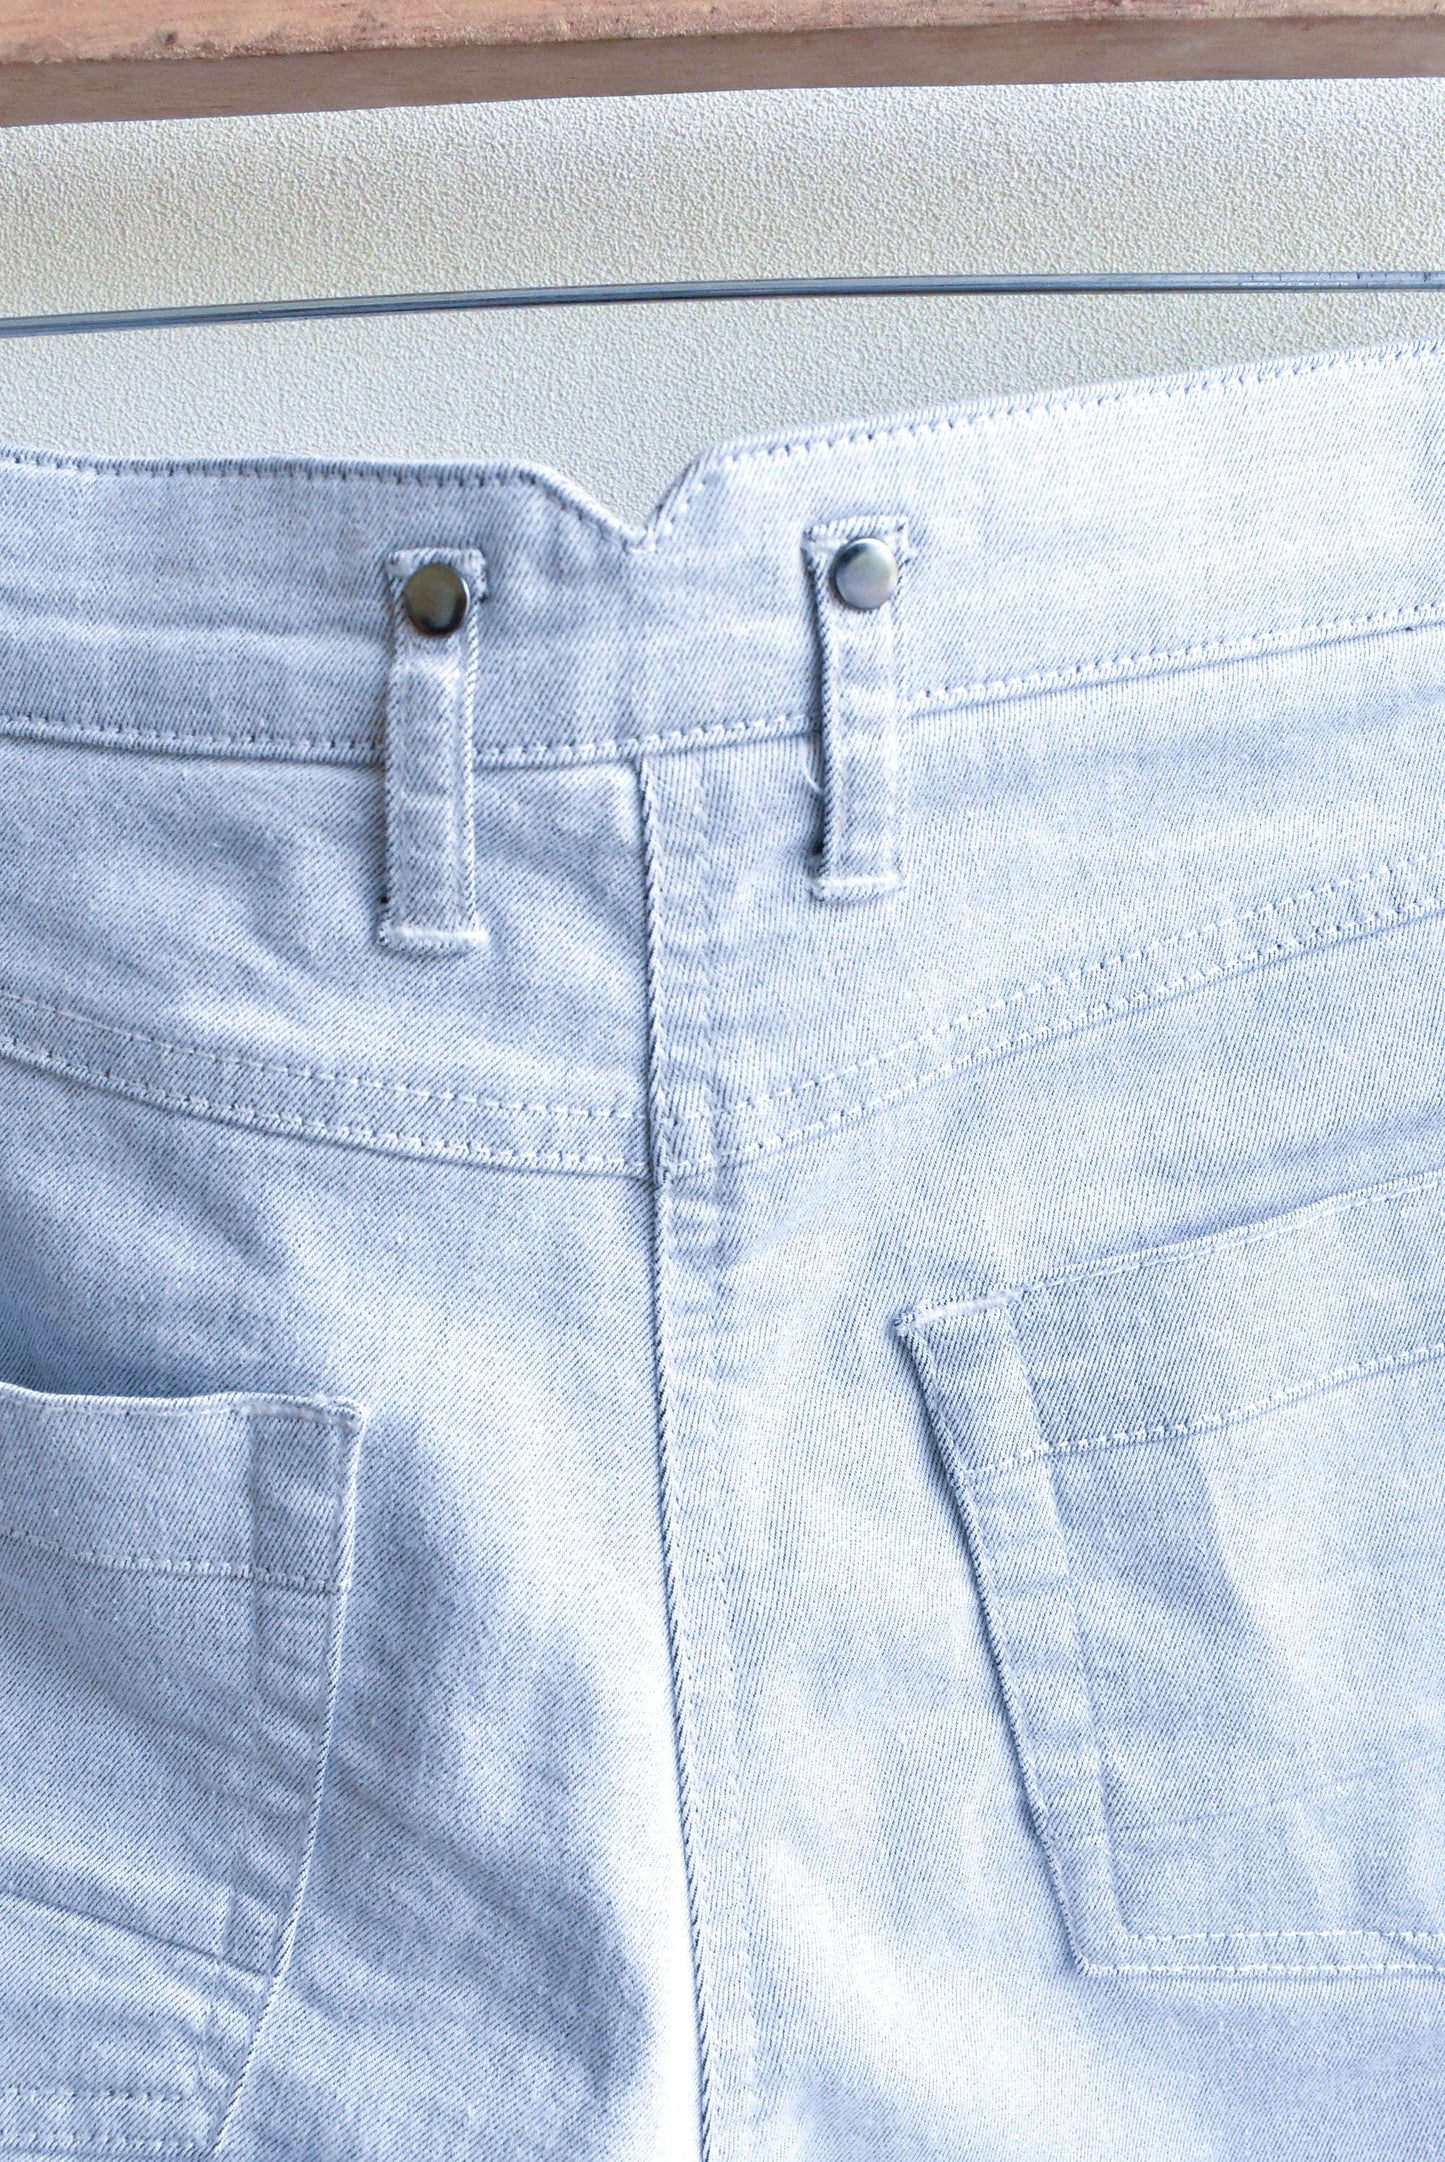 PJ Jeans & Co. 3/4 trousers, size 12